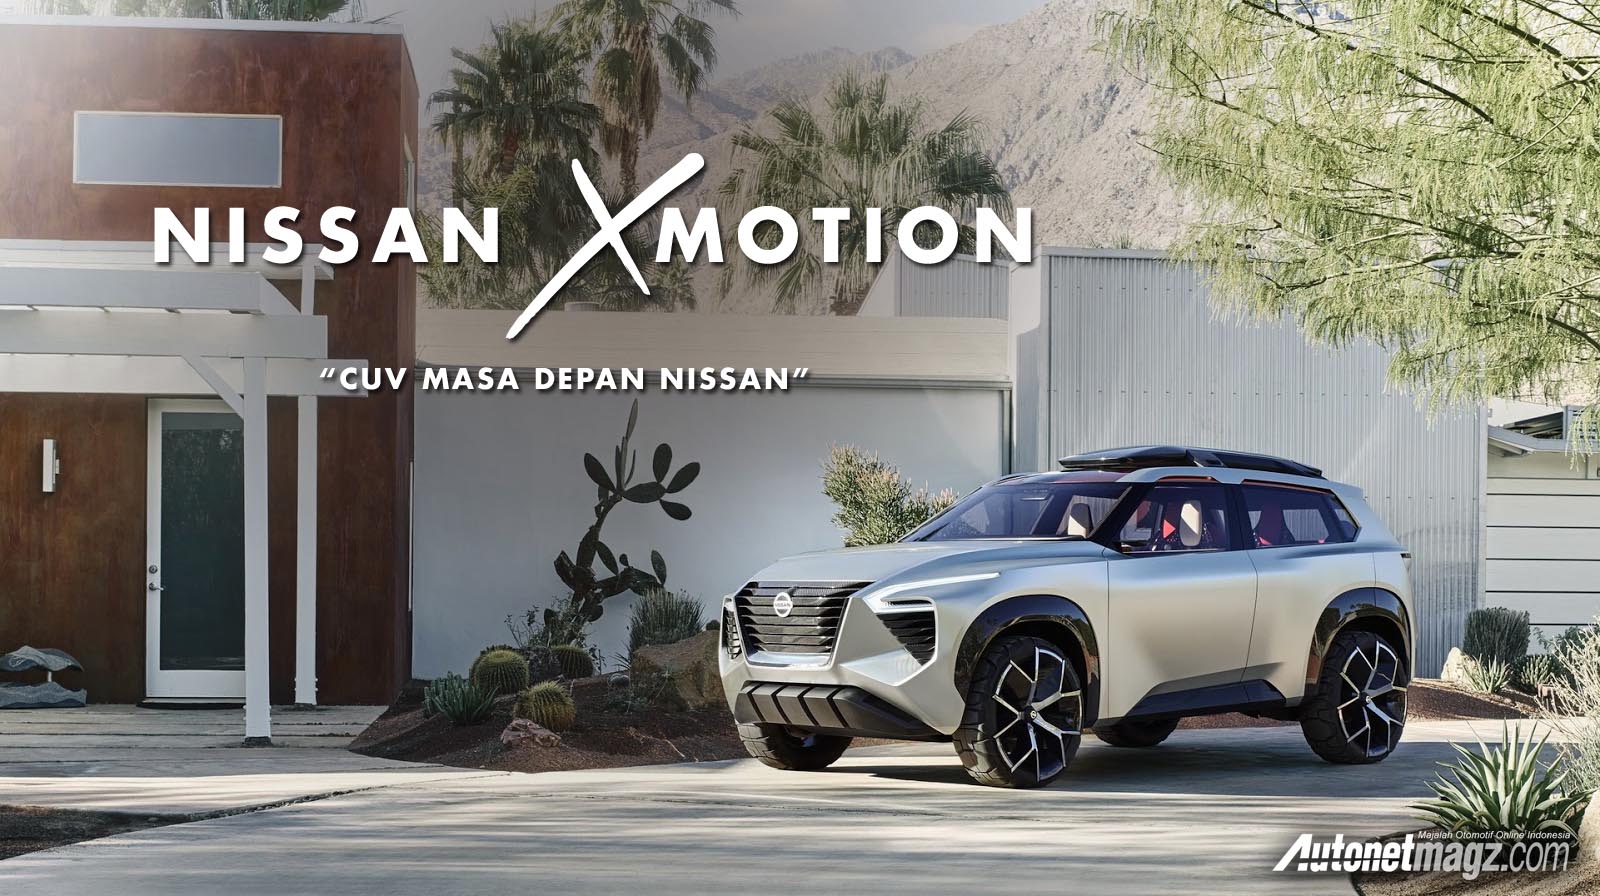 Berita, nissan xmotion: Nissan XMotion : Gambaran SUV Masa Depan Nissan Yang Agresif